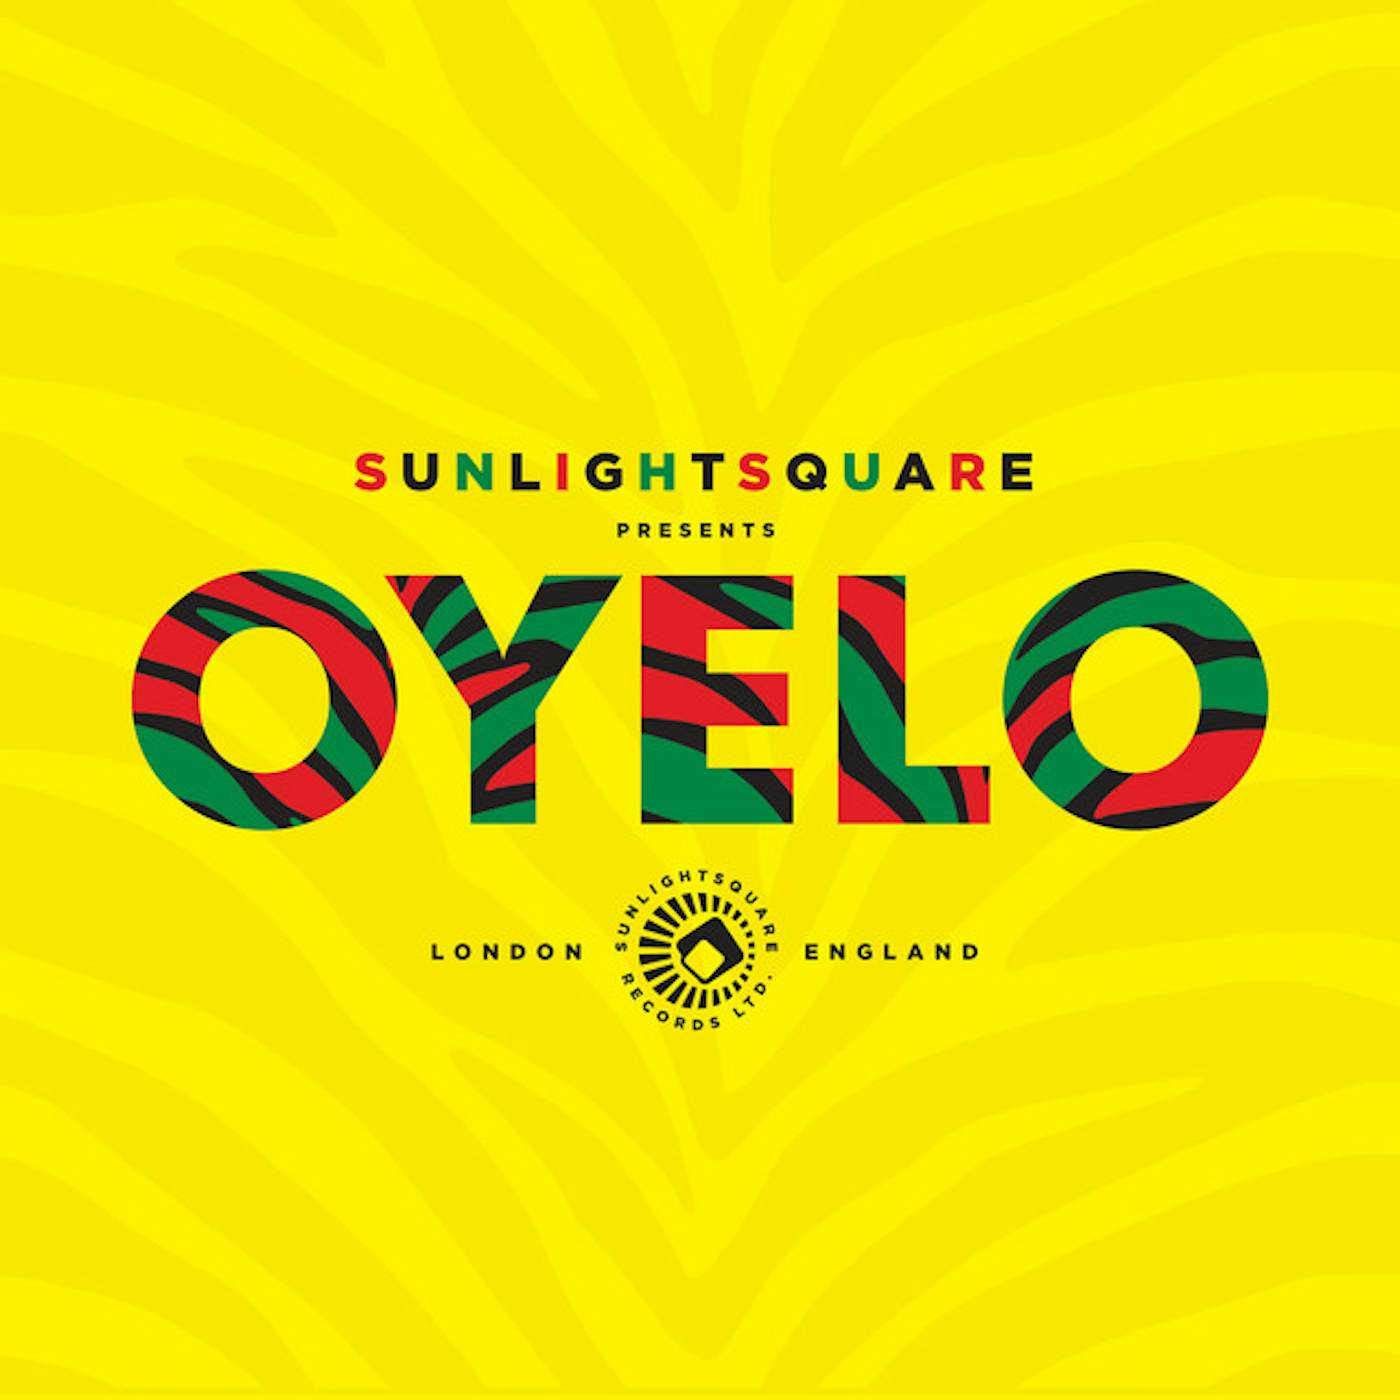 Sunlightsquare Oyelo Vinyl Record